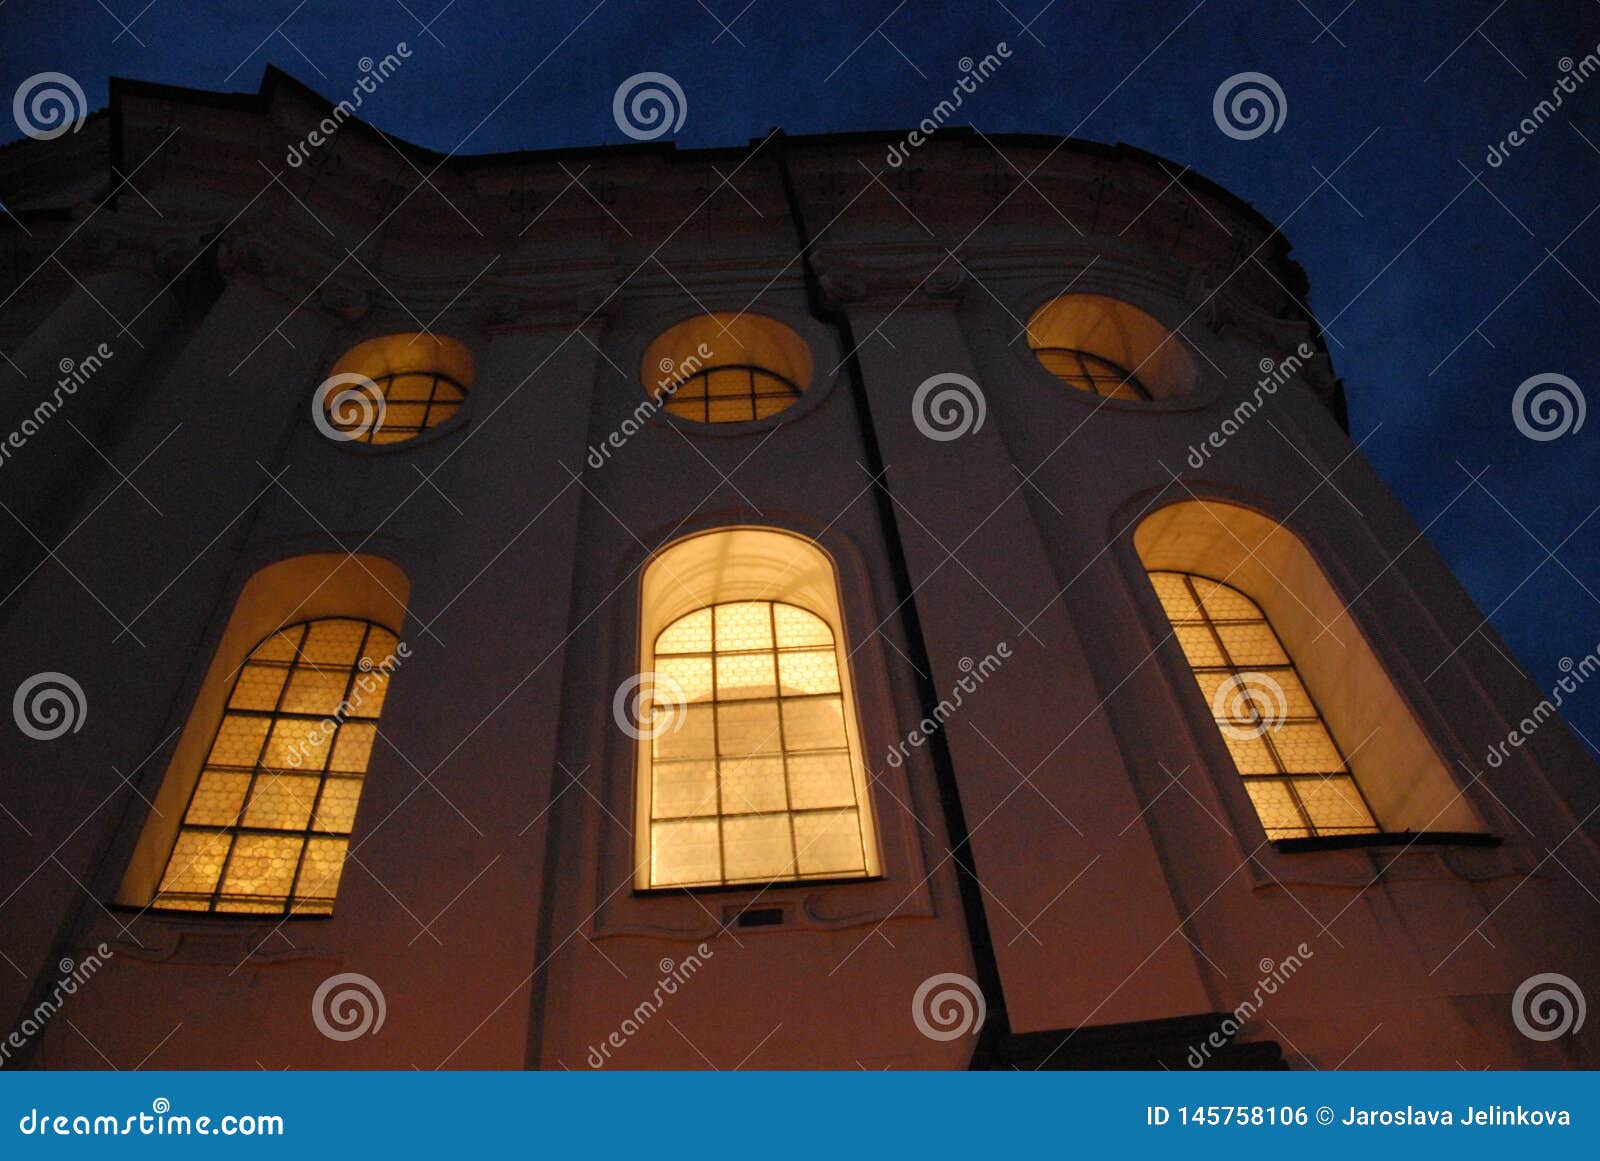 illuminated windows of brevnov monastery